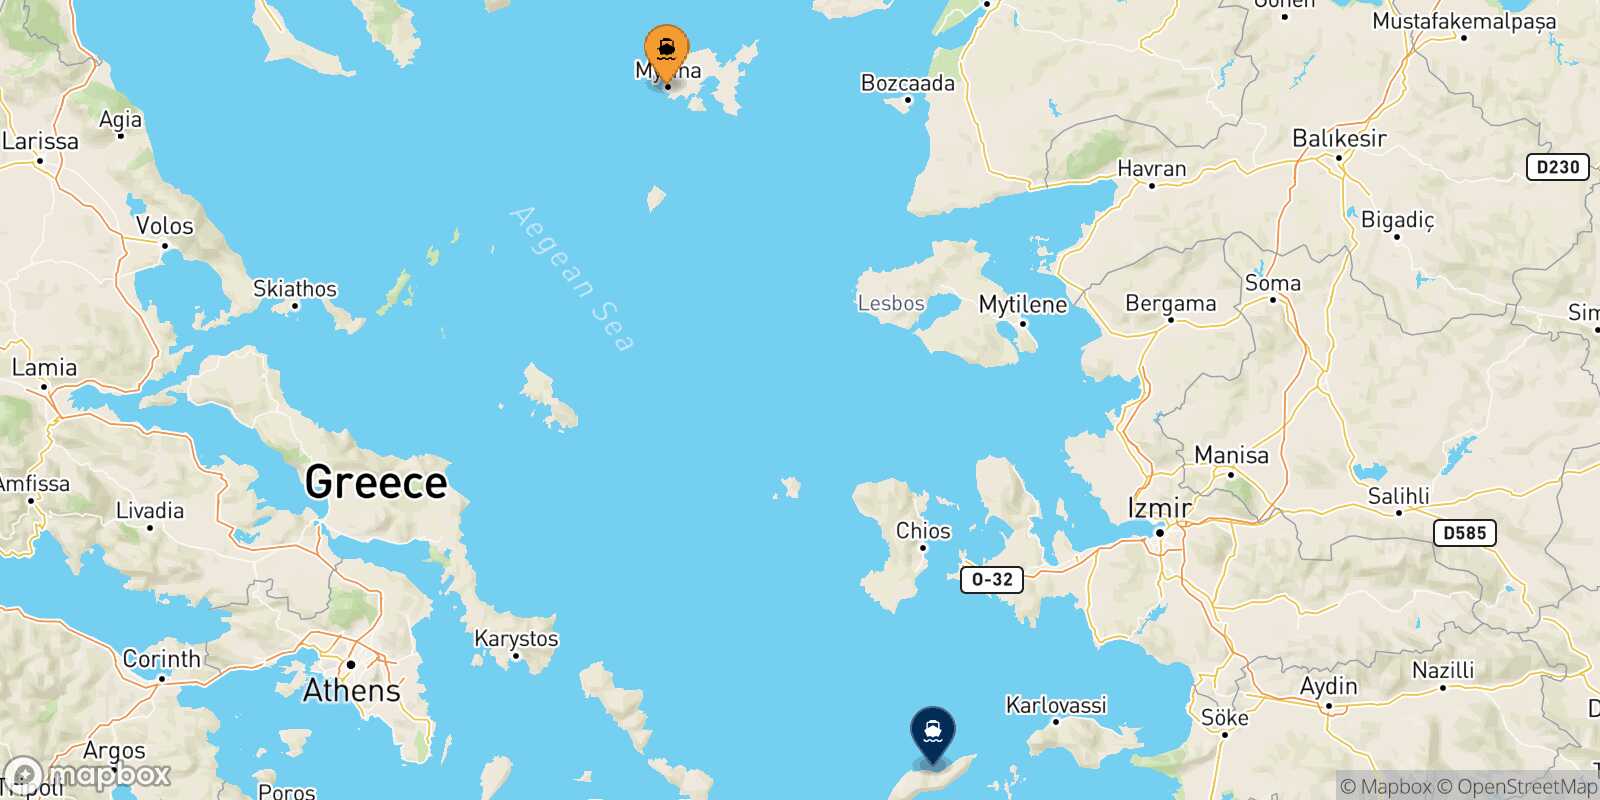 Myrina (Limnos) Agios Kirikos (Ikaria) route map